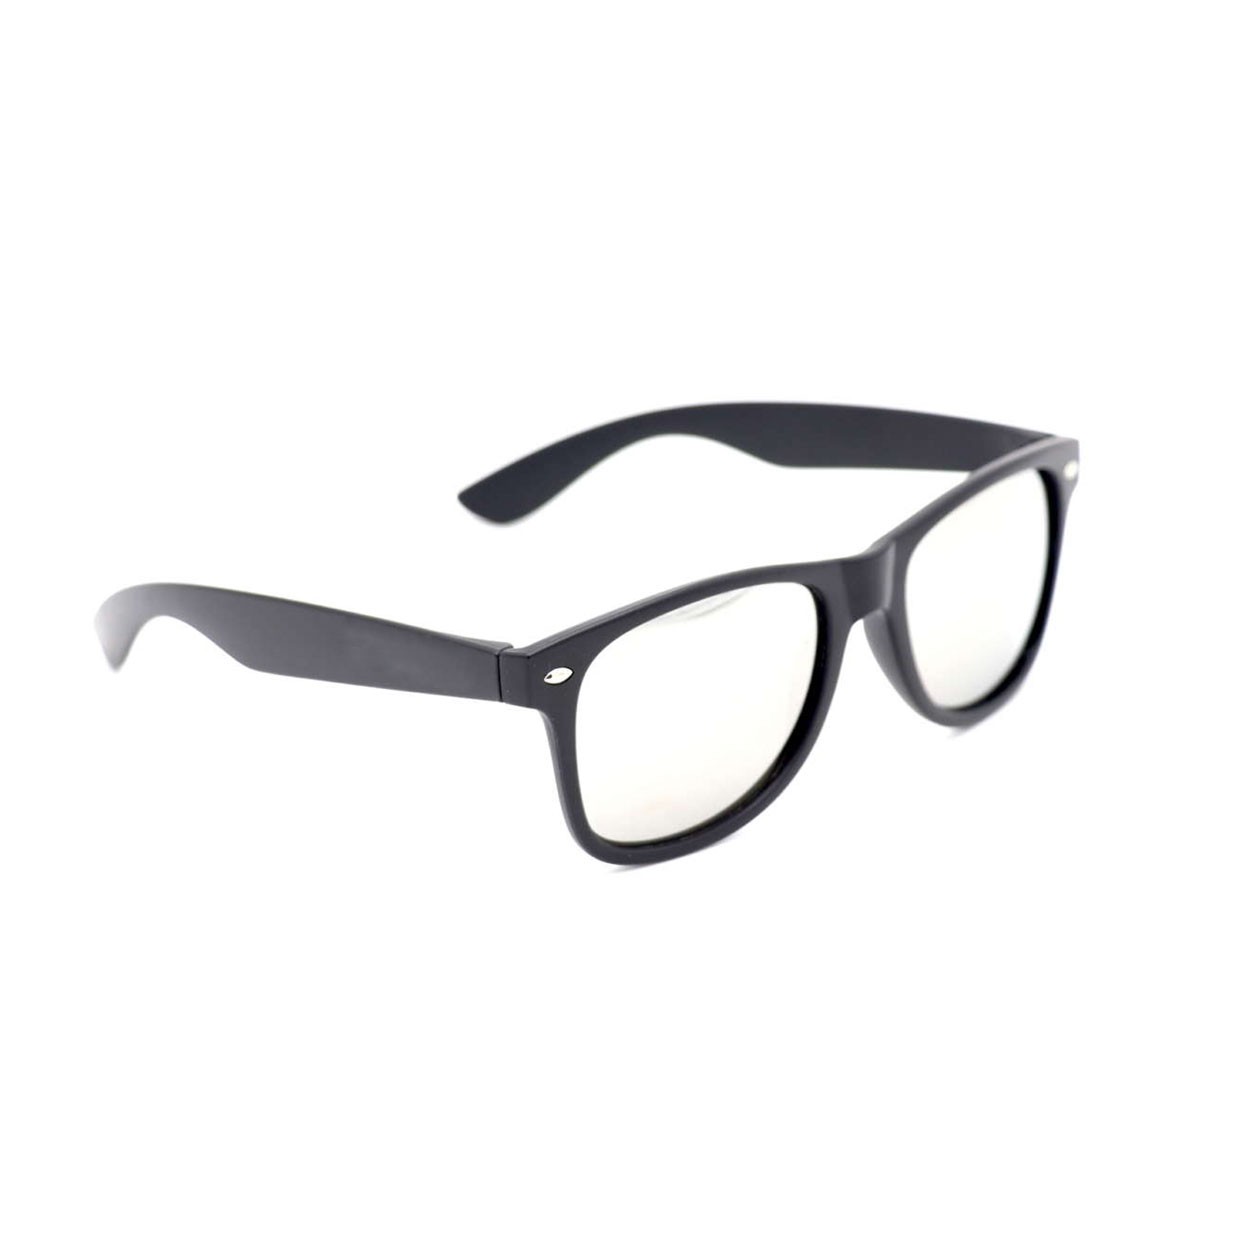 Product Details: Classic Sunglasses Black (AB LK Sunglasses Black)